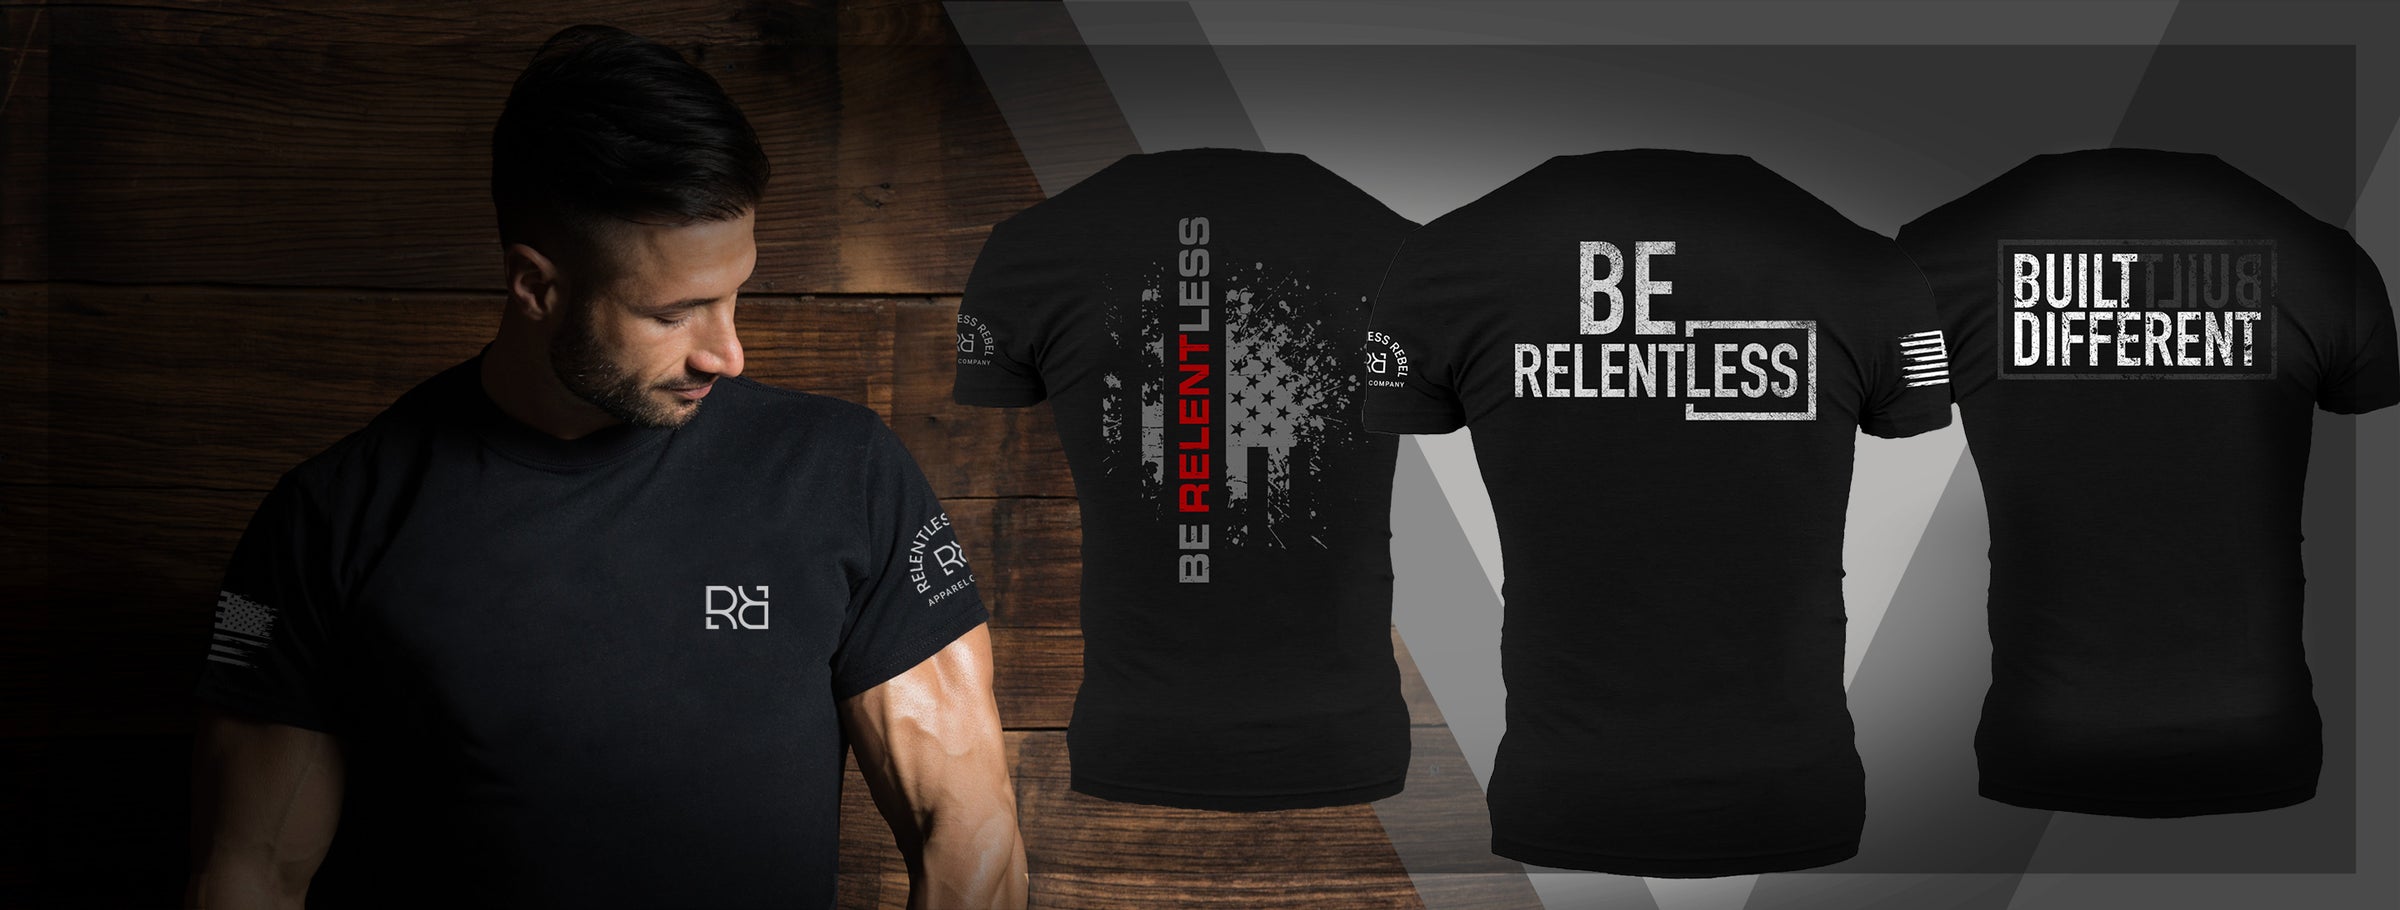 Be Relentless Built Different back design t-shirts